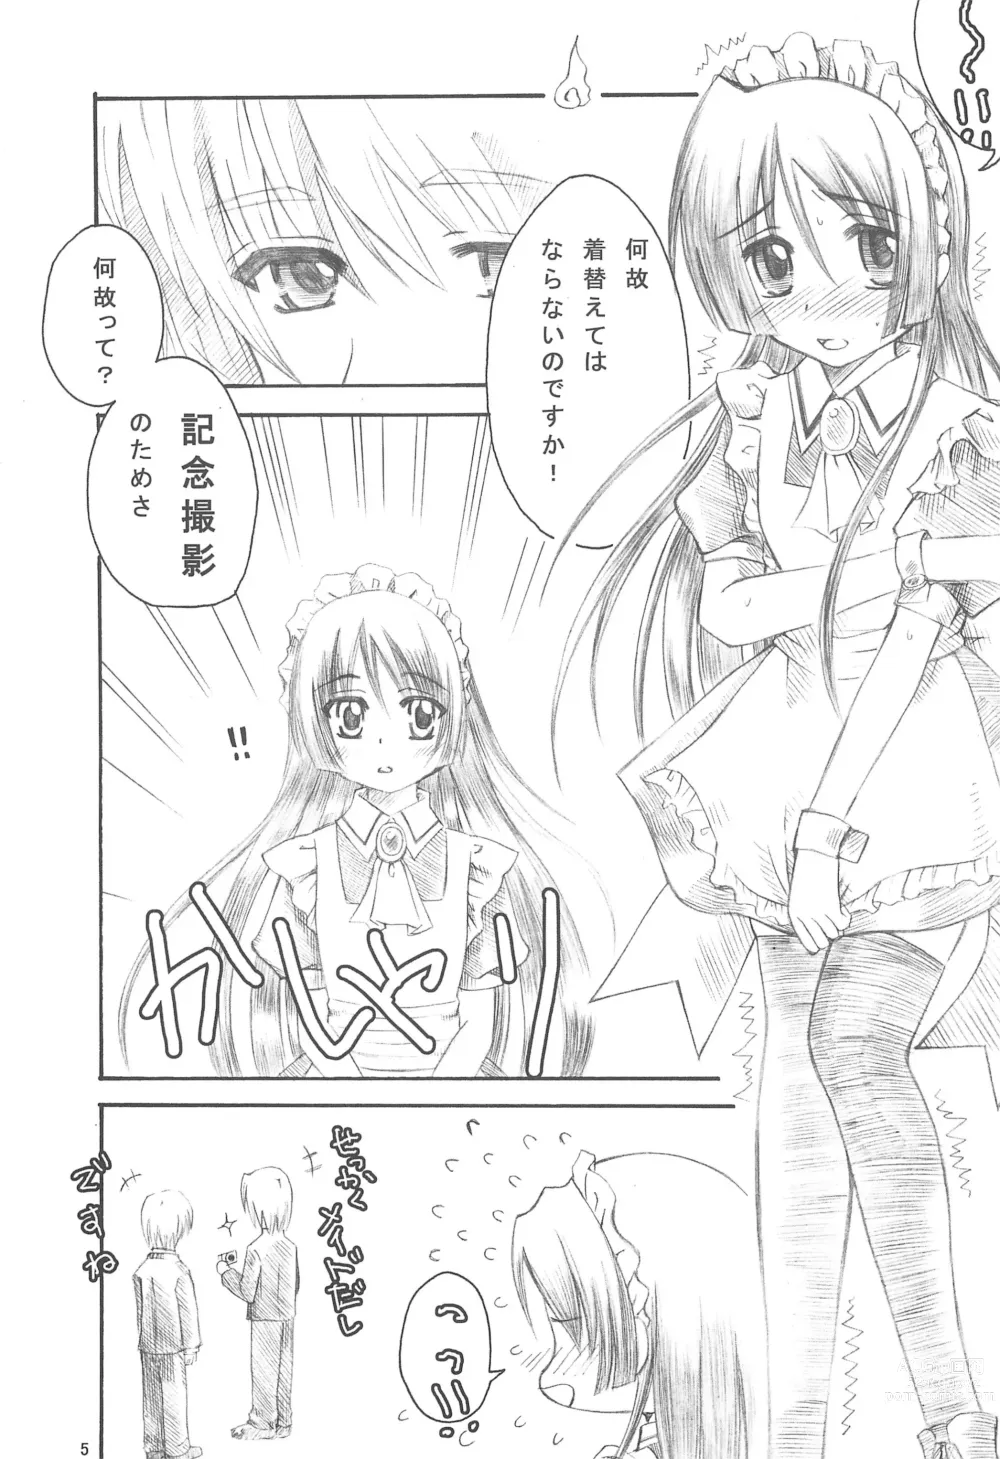 Page 5 of doujinshi Mini Skirt Kururin Isumi-bon